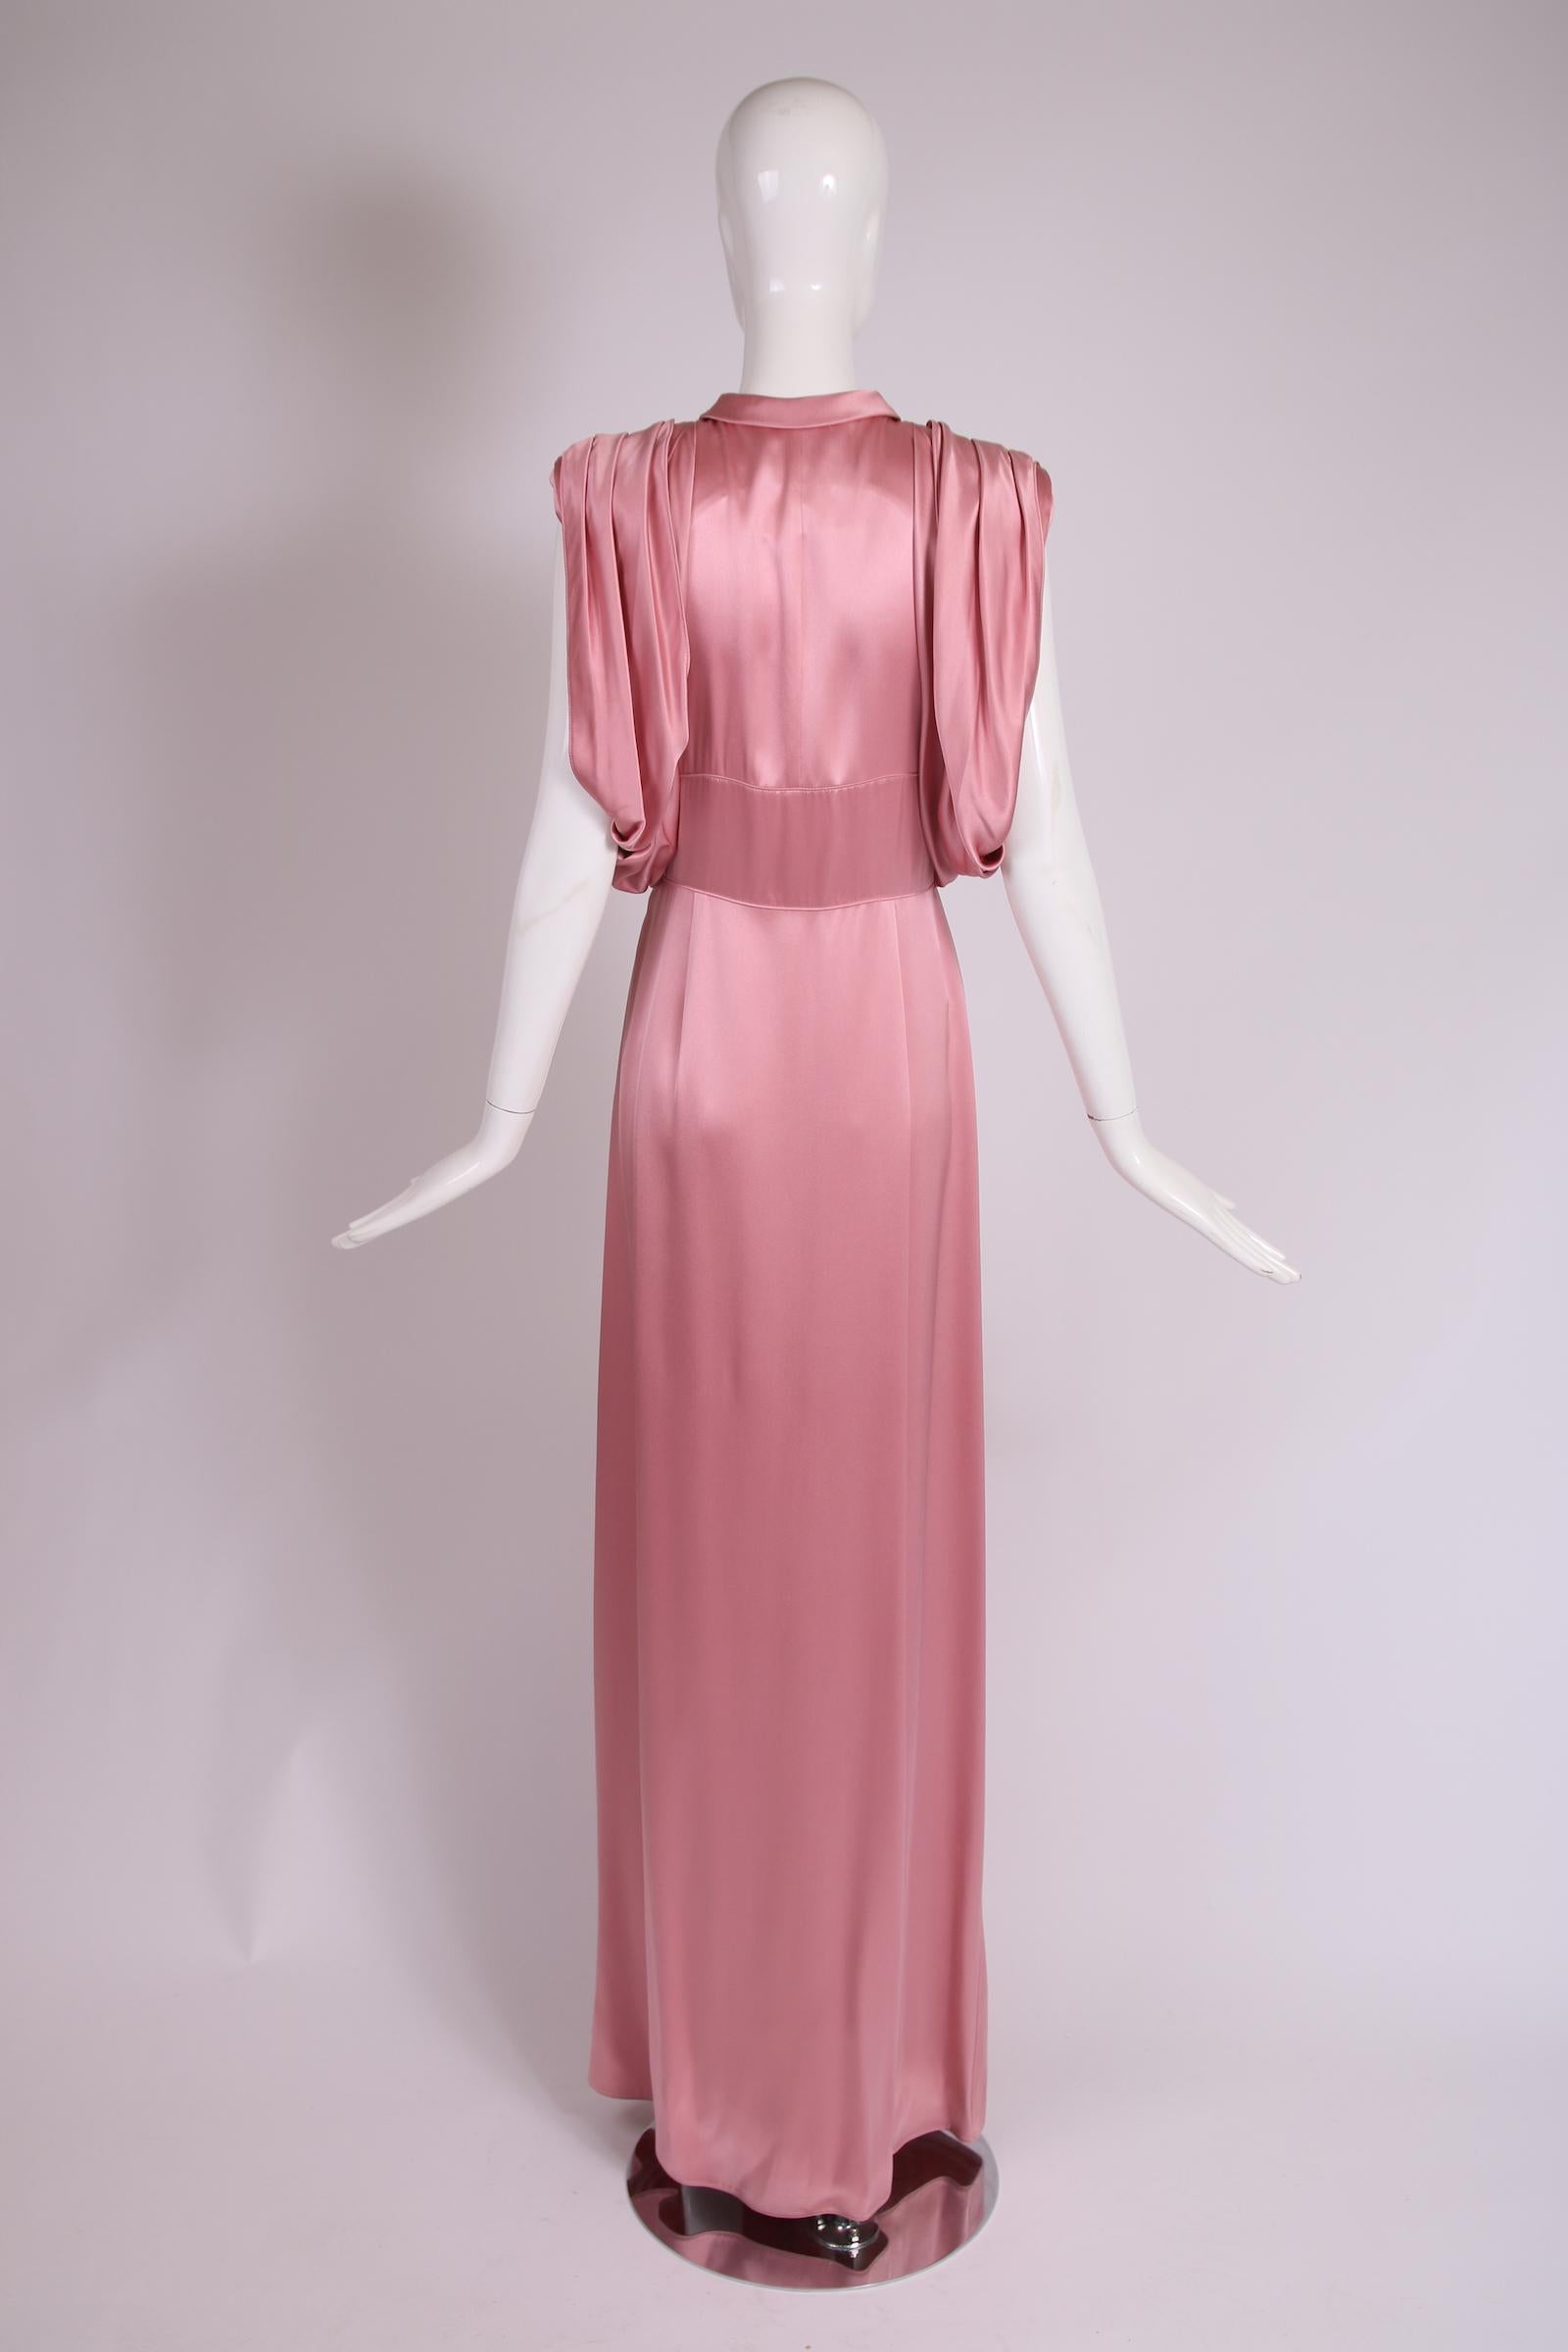 prada pink dress